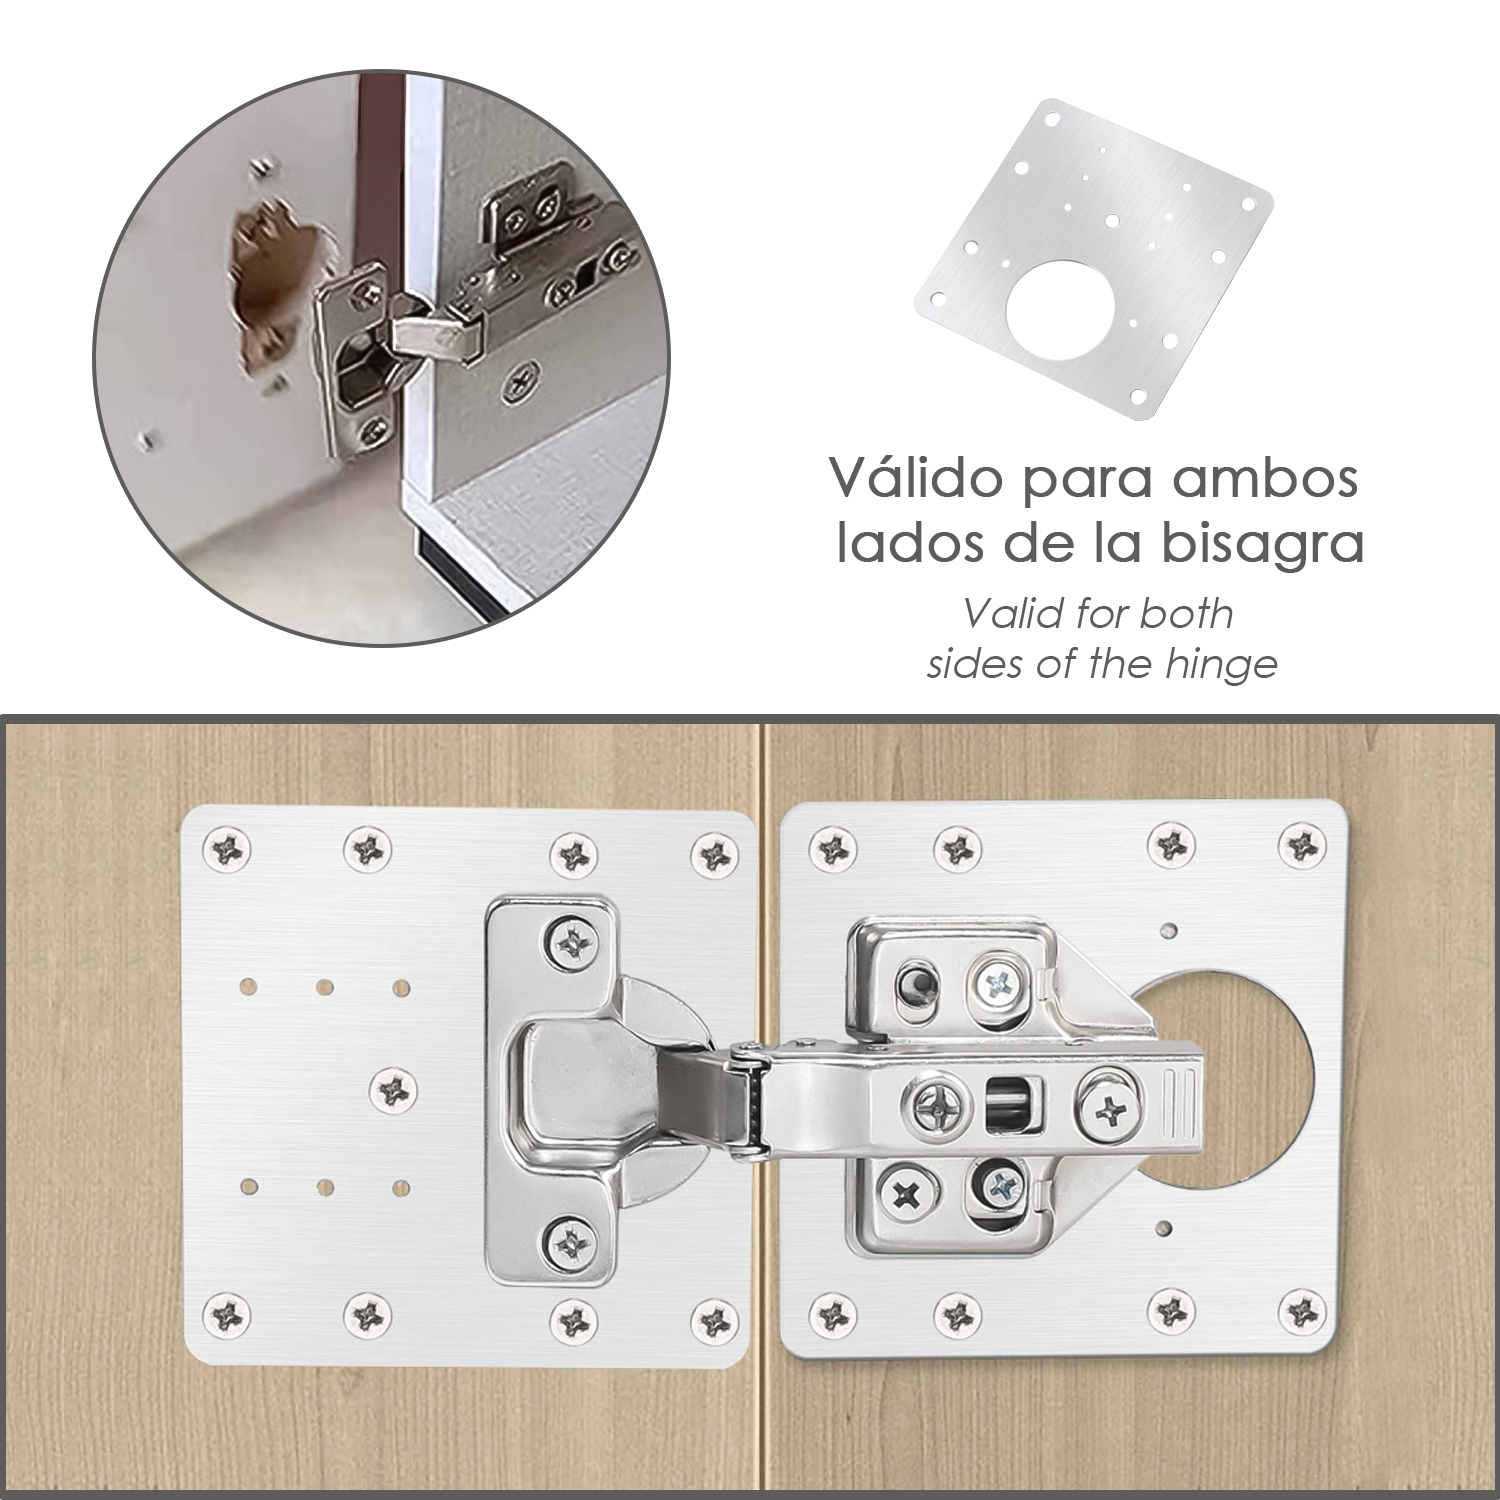 Cierre Iman Universal Atornillable/ Adhesivo Para Puertas / Cajones /  Frigorificos / Armarios.